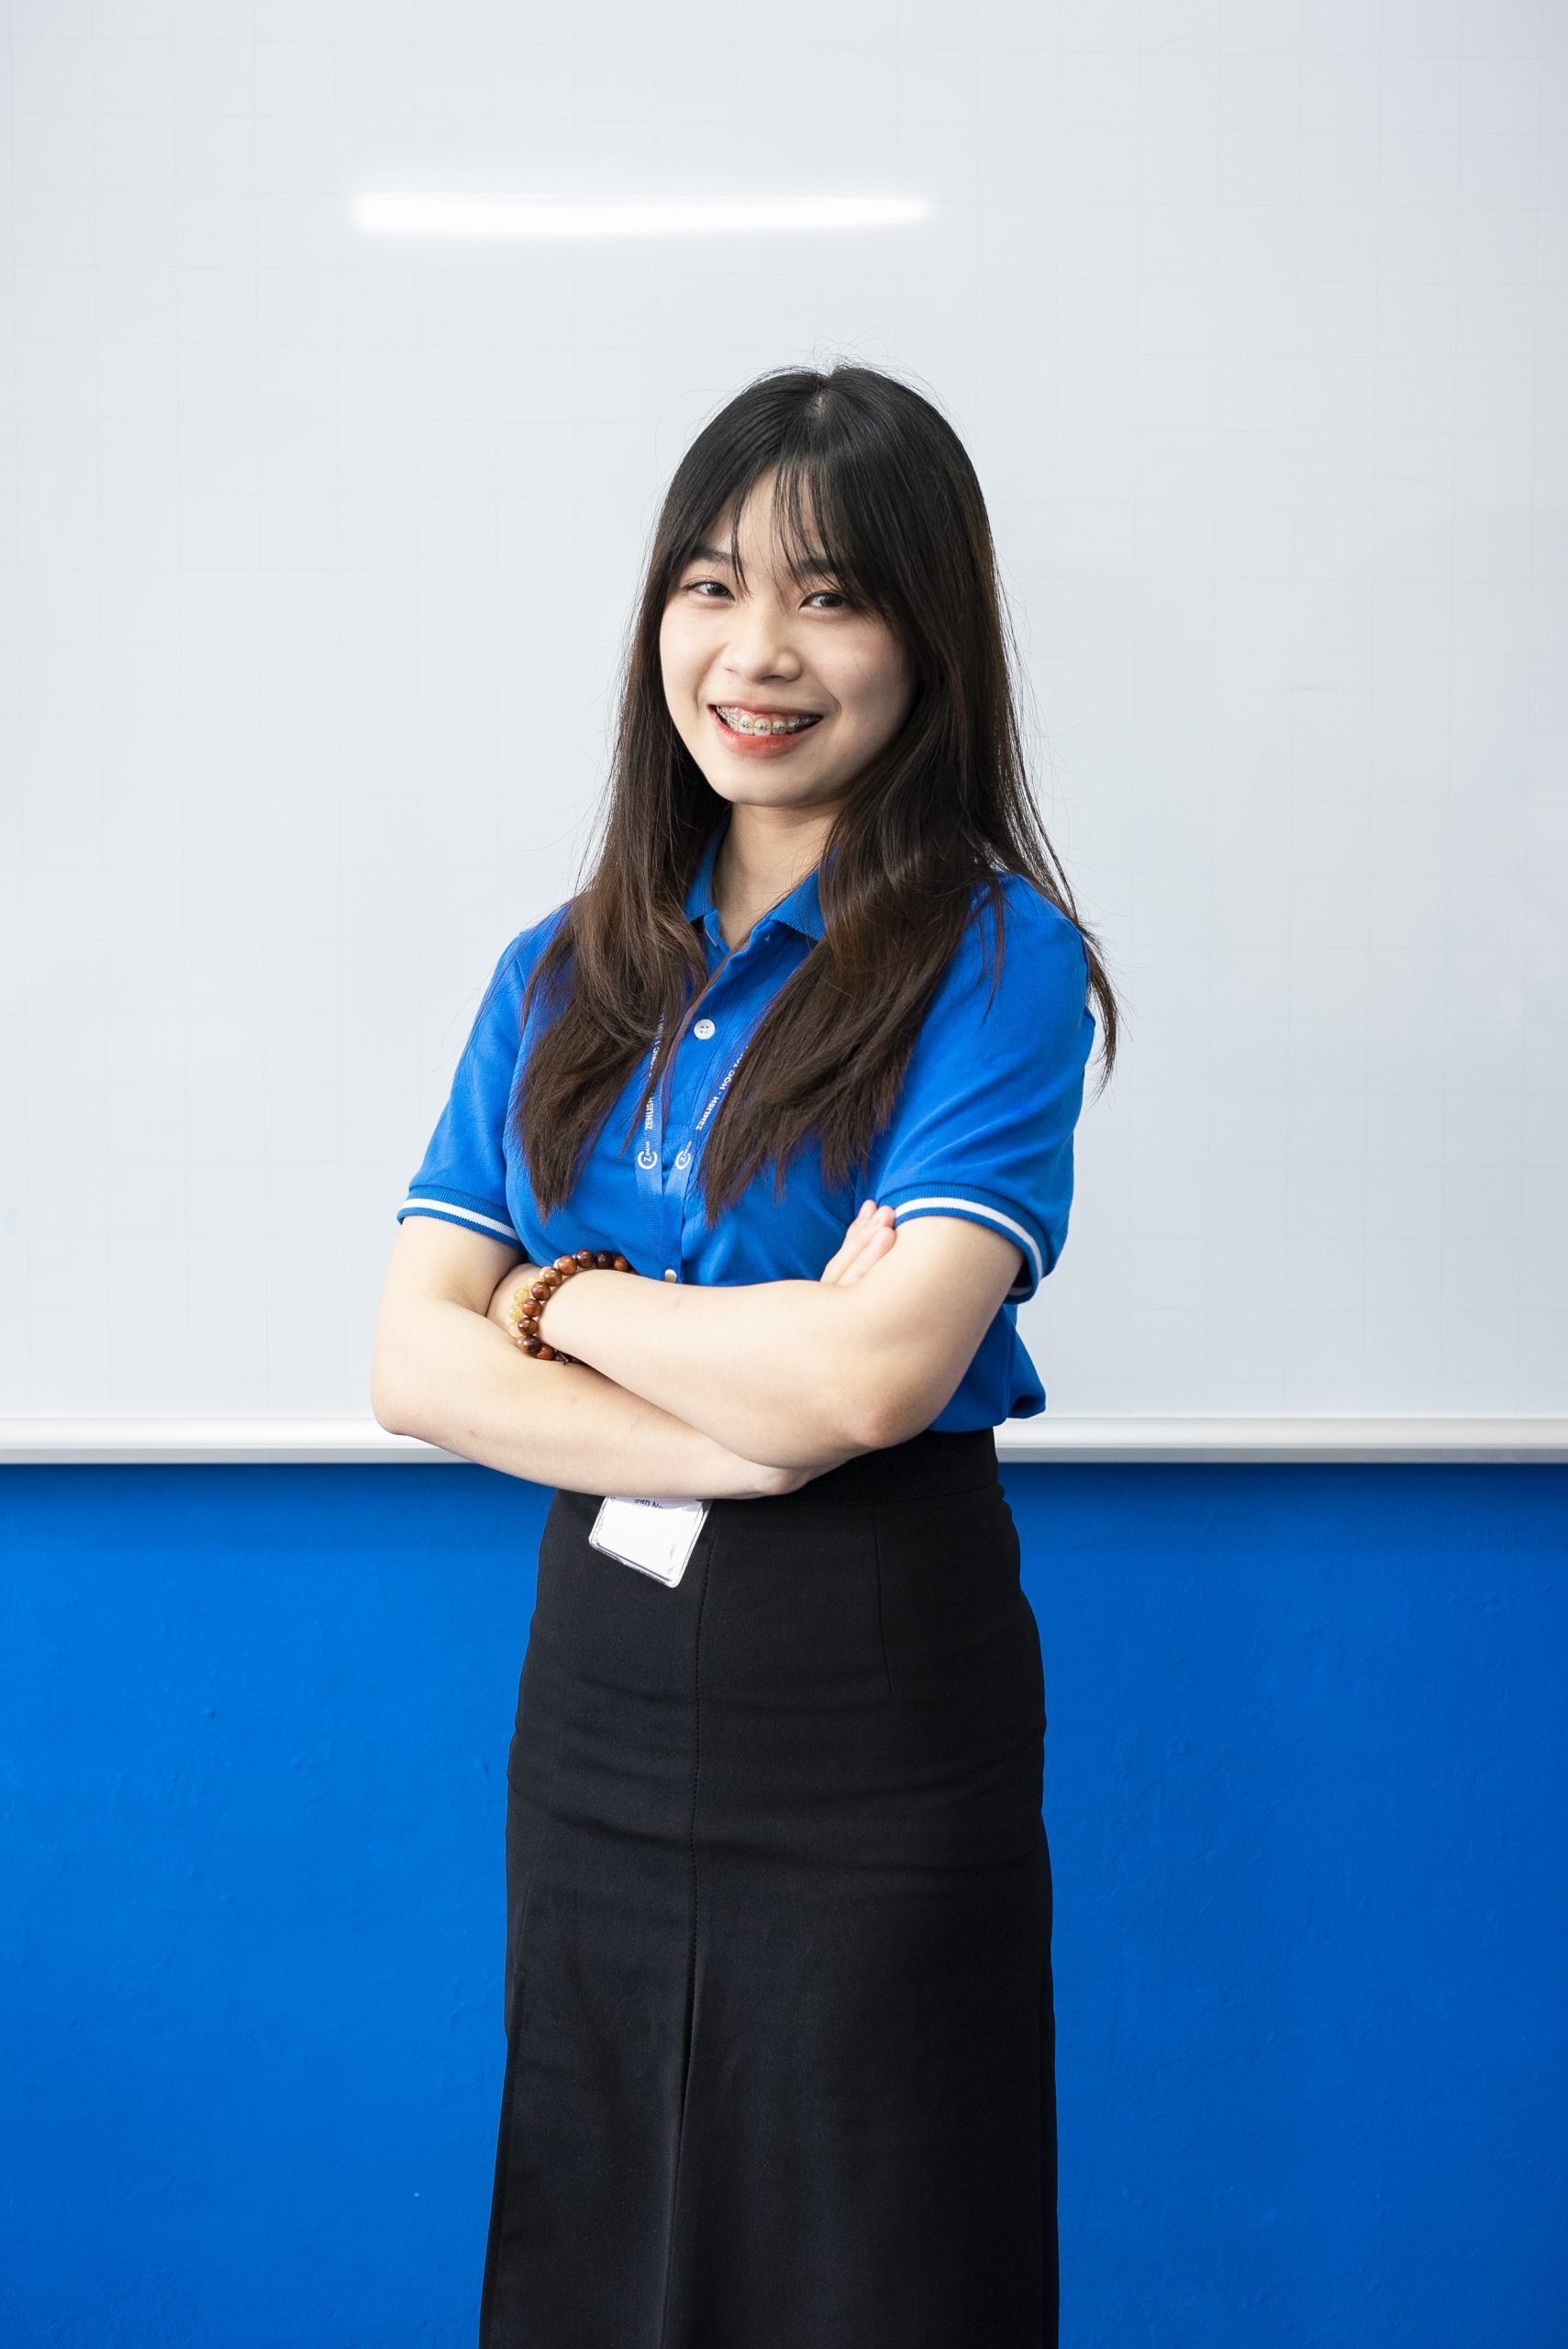 Ms. Ngần Nguyễn